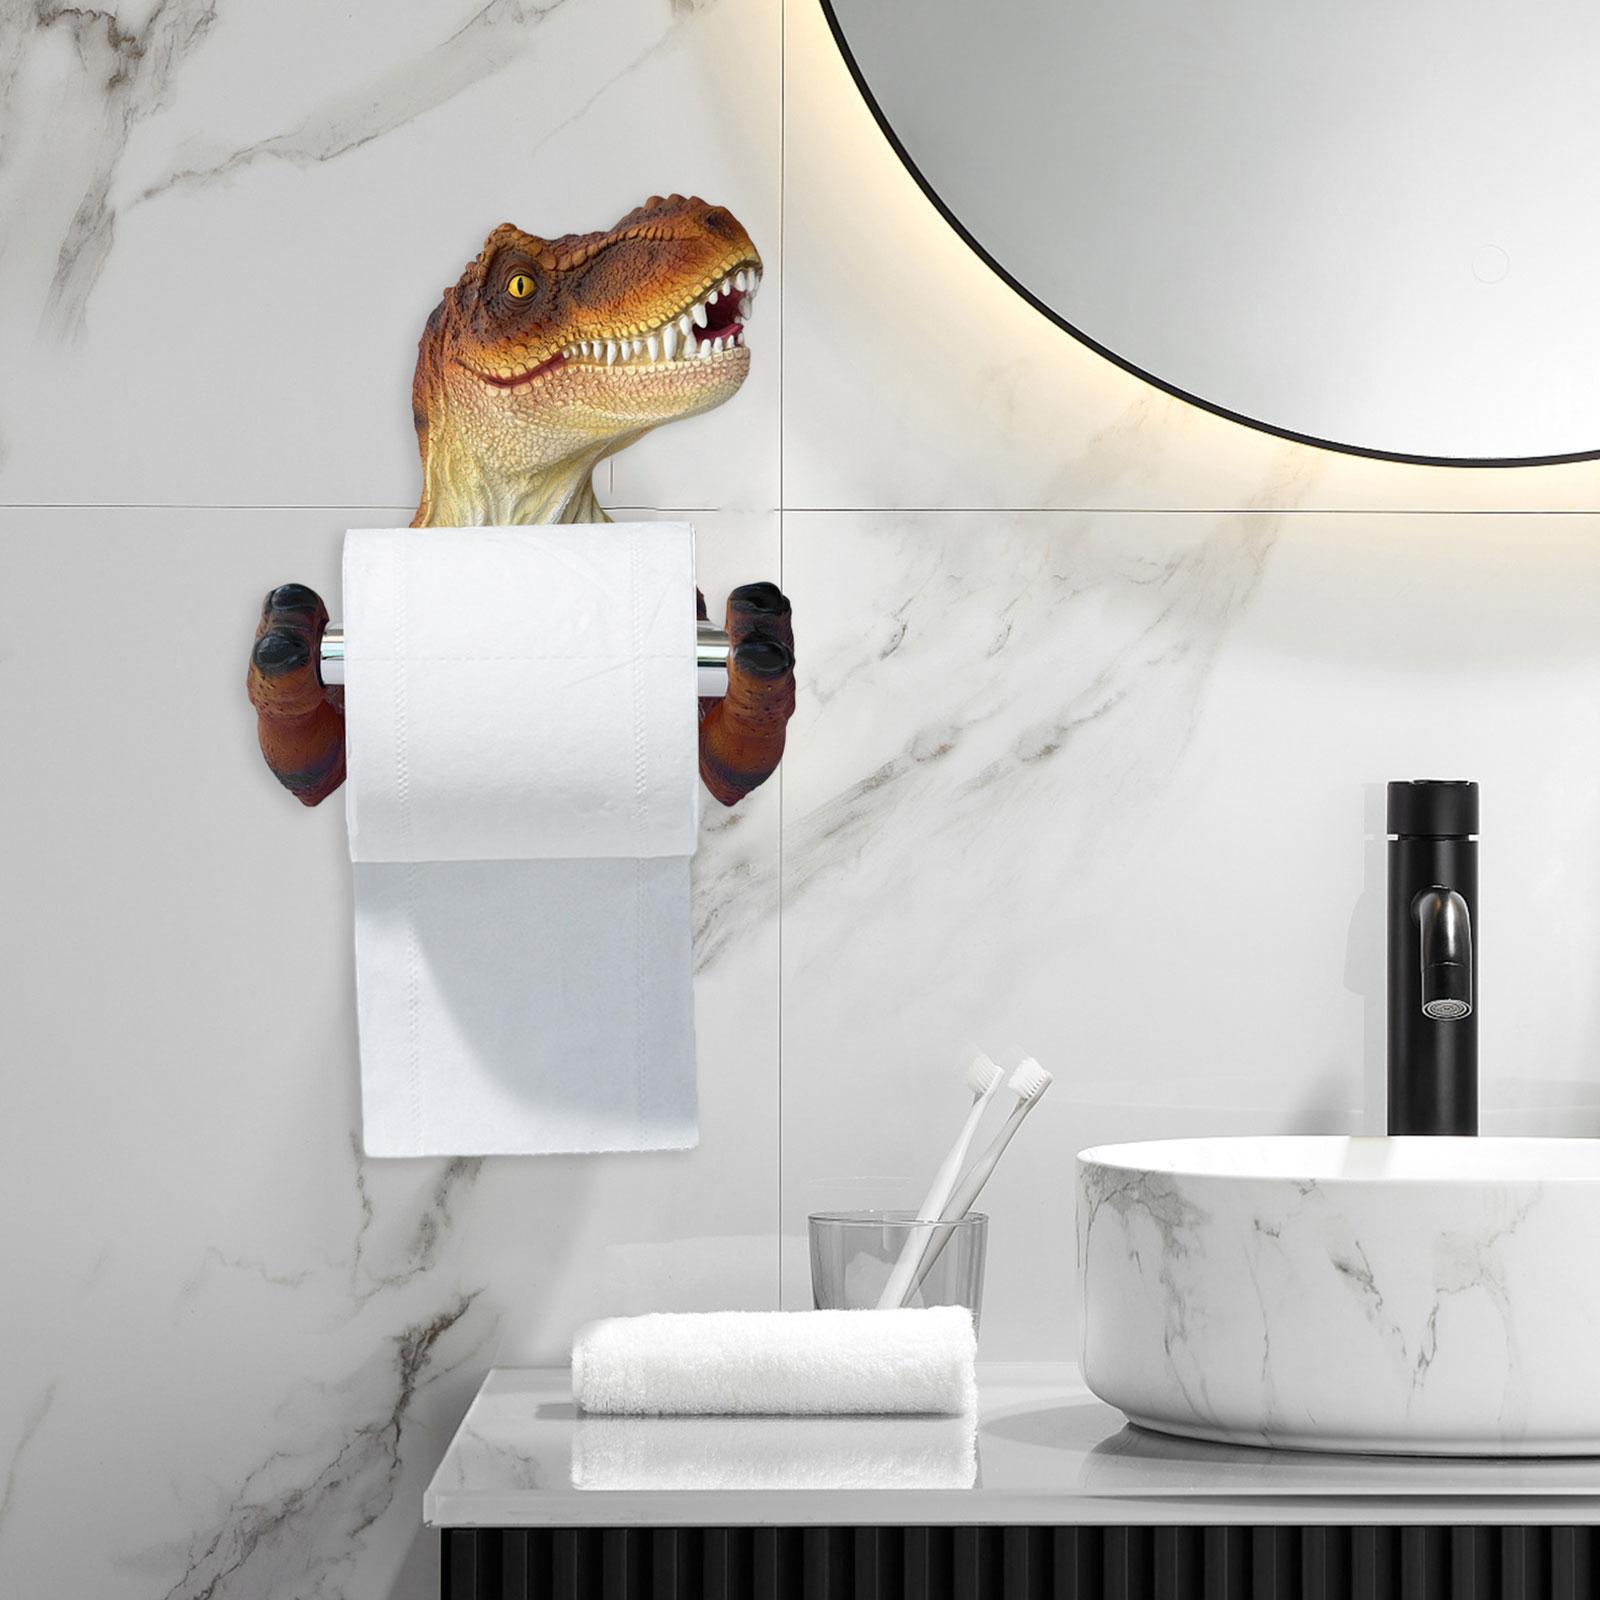 Toilet Tissue Holder, Bathroom Toilet Paper Holder, Toilet Paper Rack, Toilet Roll Holder, for Bathroom Kitchen Washroom Restroom Toilet